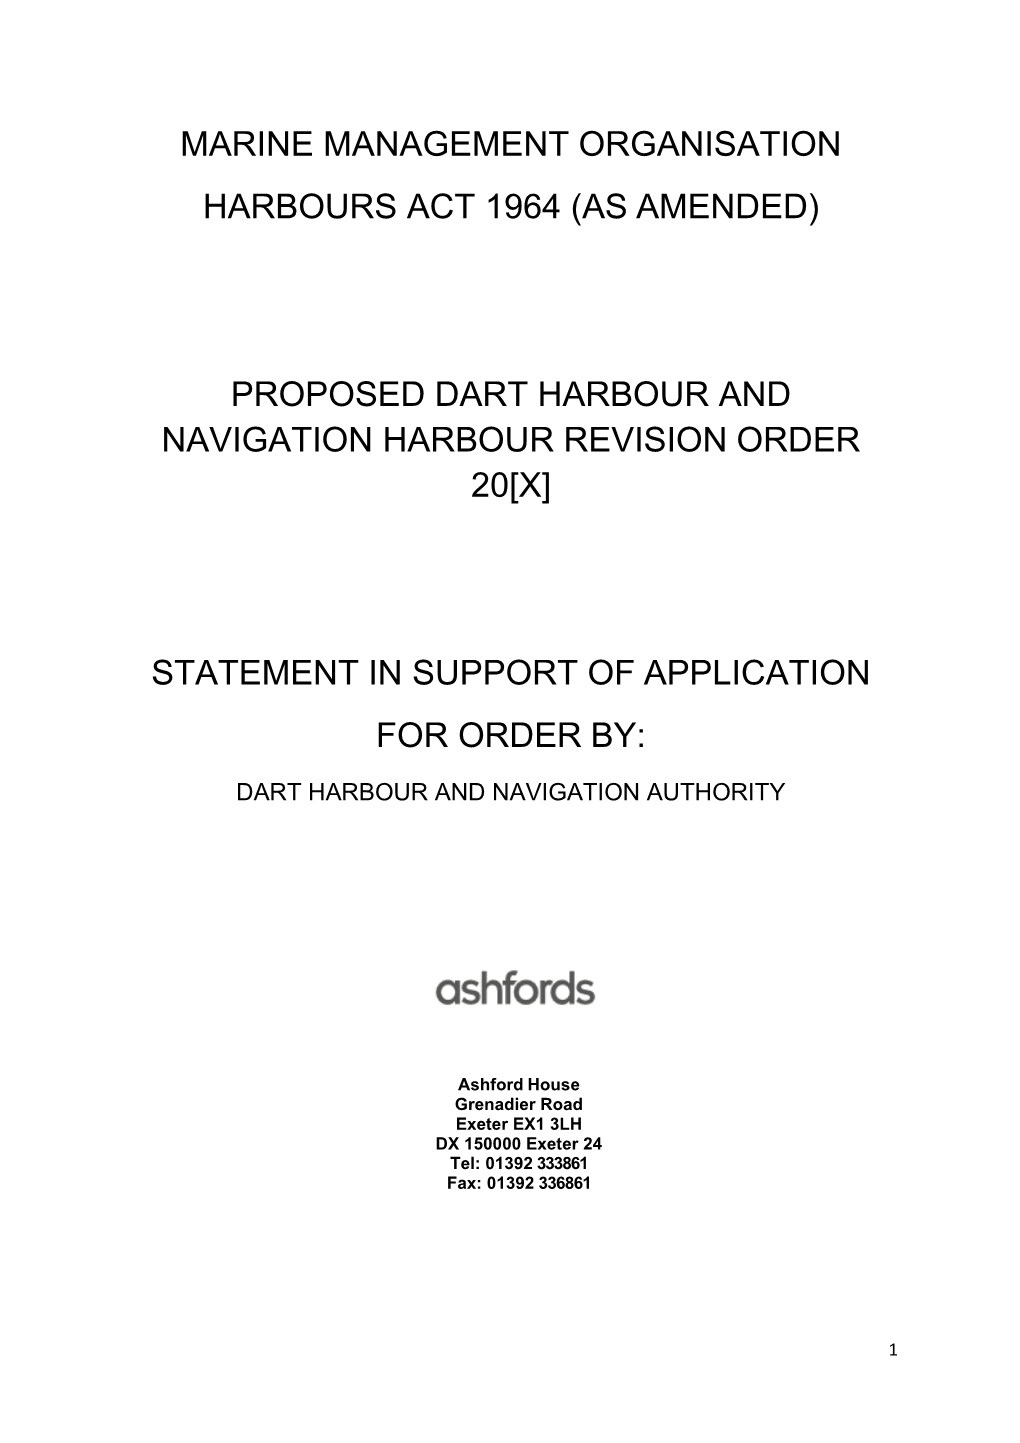 Dart Harbour and Navigation Harbour Revision Order 20[X]